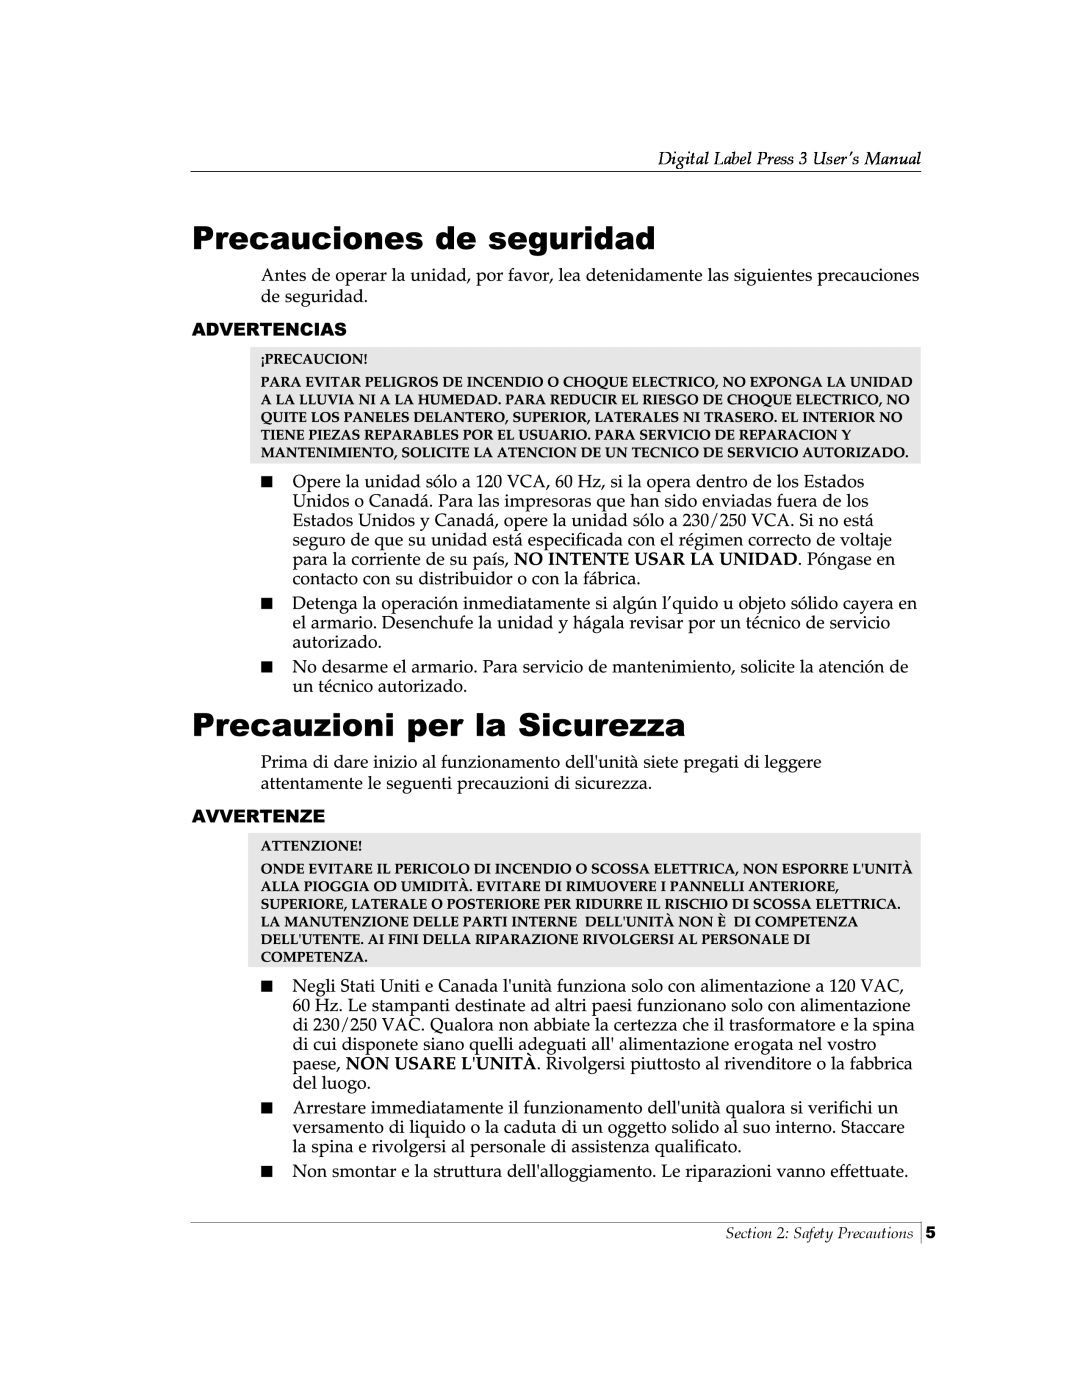 Primera Technology 510212 manual Digital Label Press 3 User’s Manual, Safety Precautions 